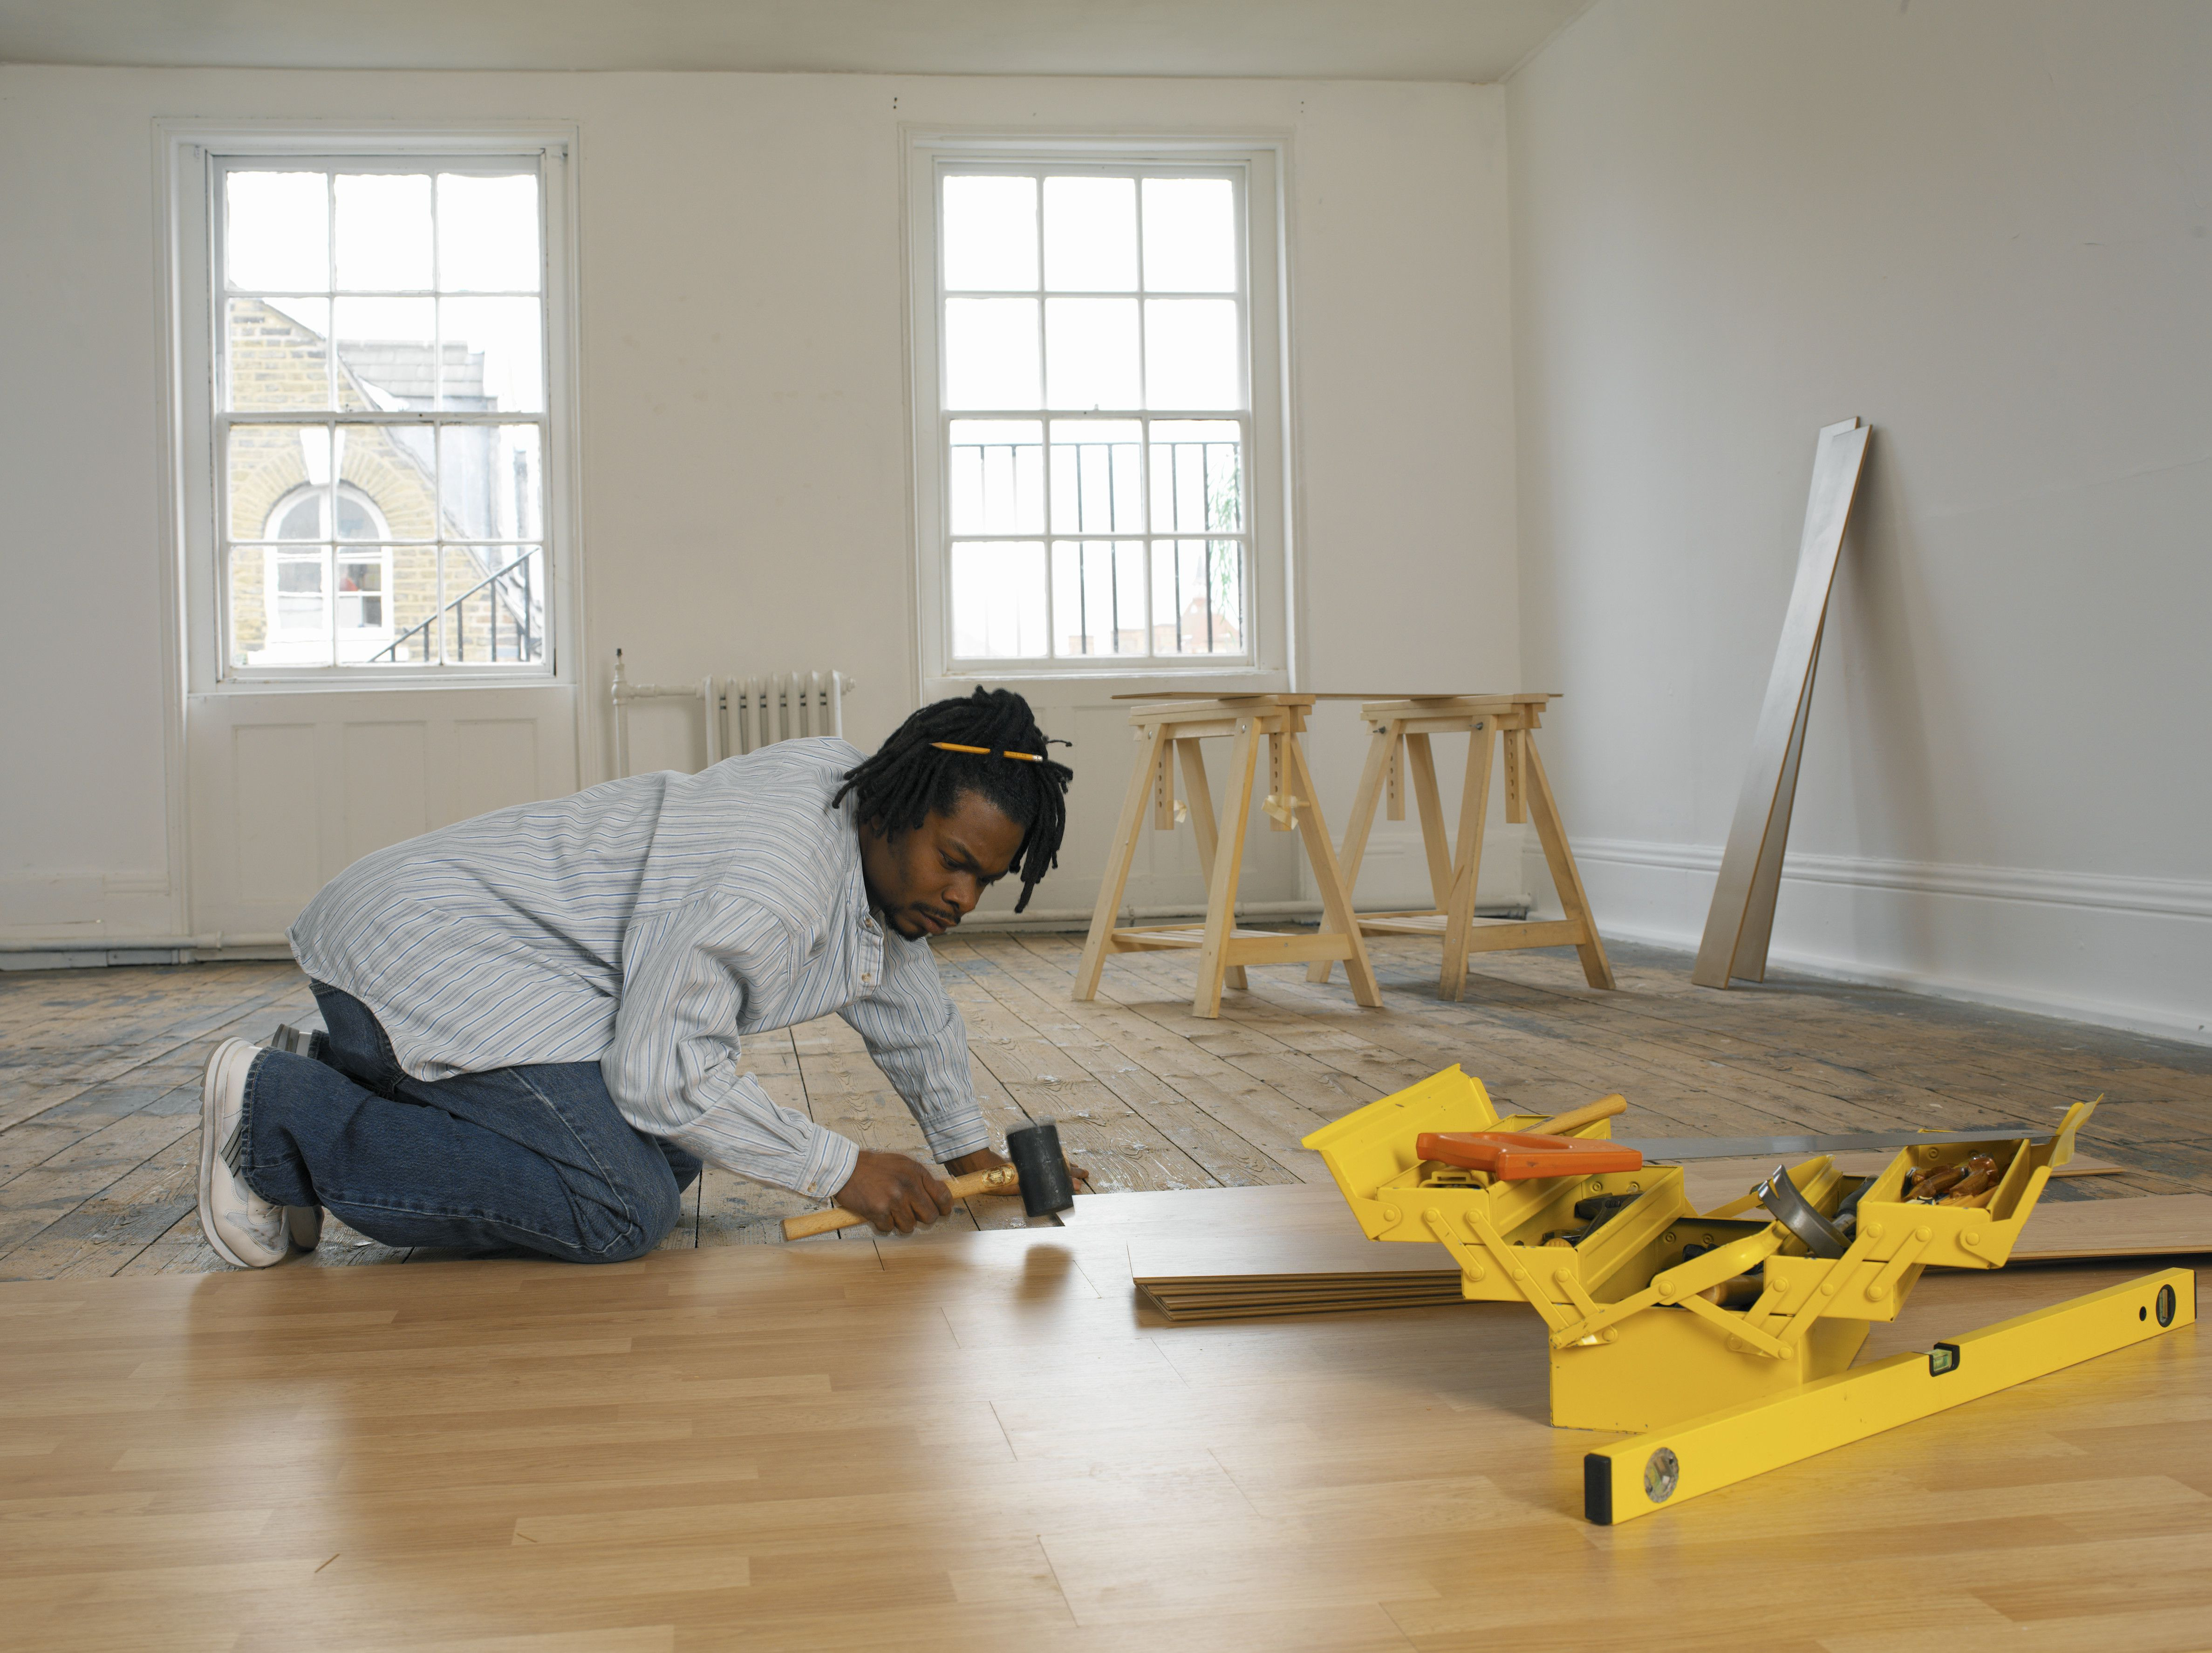 hardwood floor repair companies of major manufacturing brands for laminate flooring pertaining to laying laminate flooring